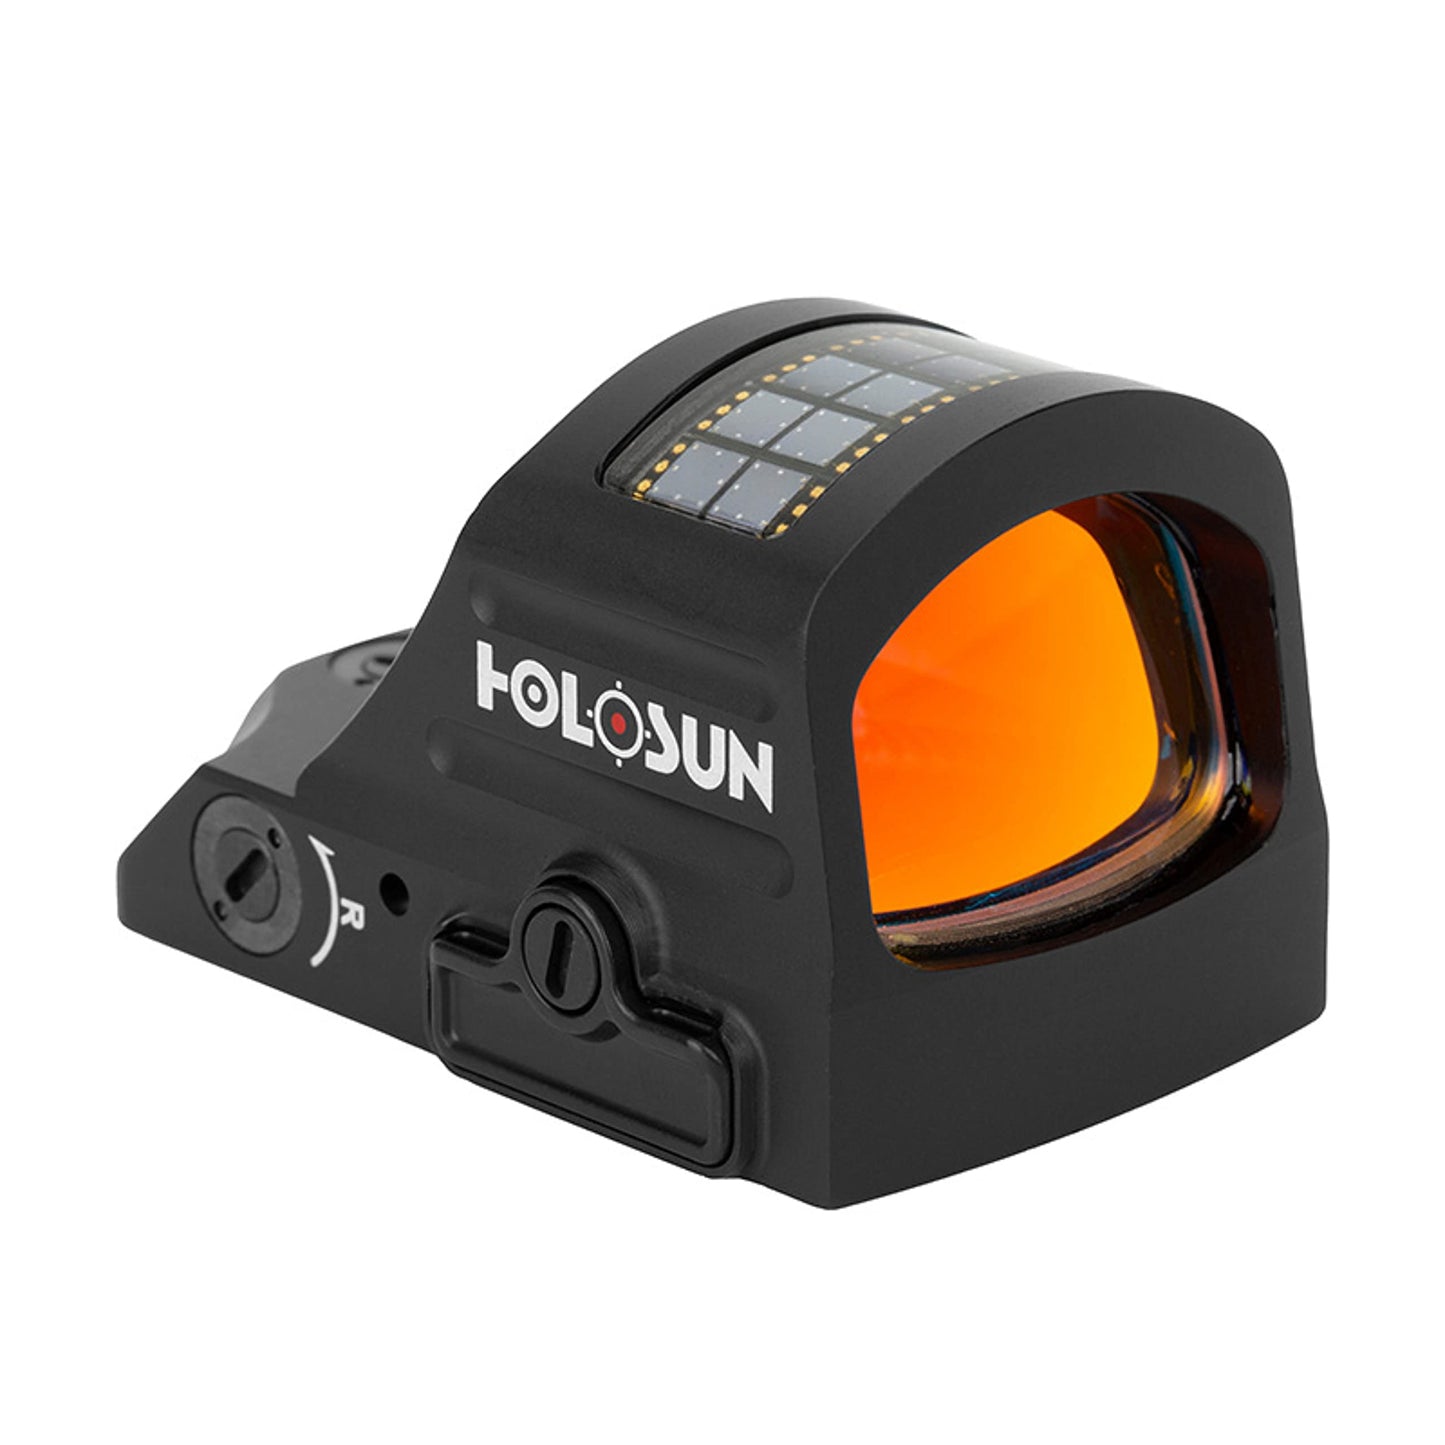 HOLOSUN Classic Multi Reticle Red Dot Sight, Black - HS507C-X2